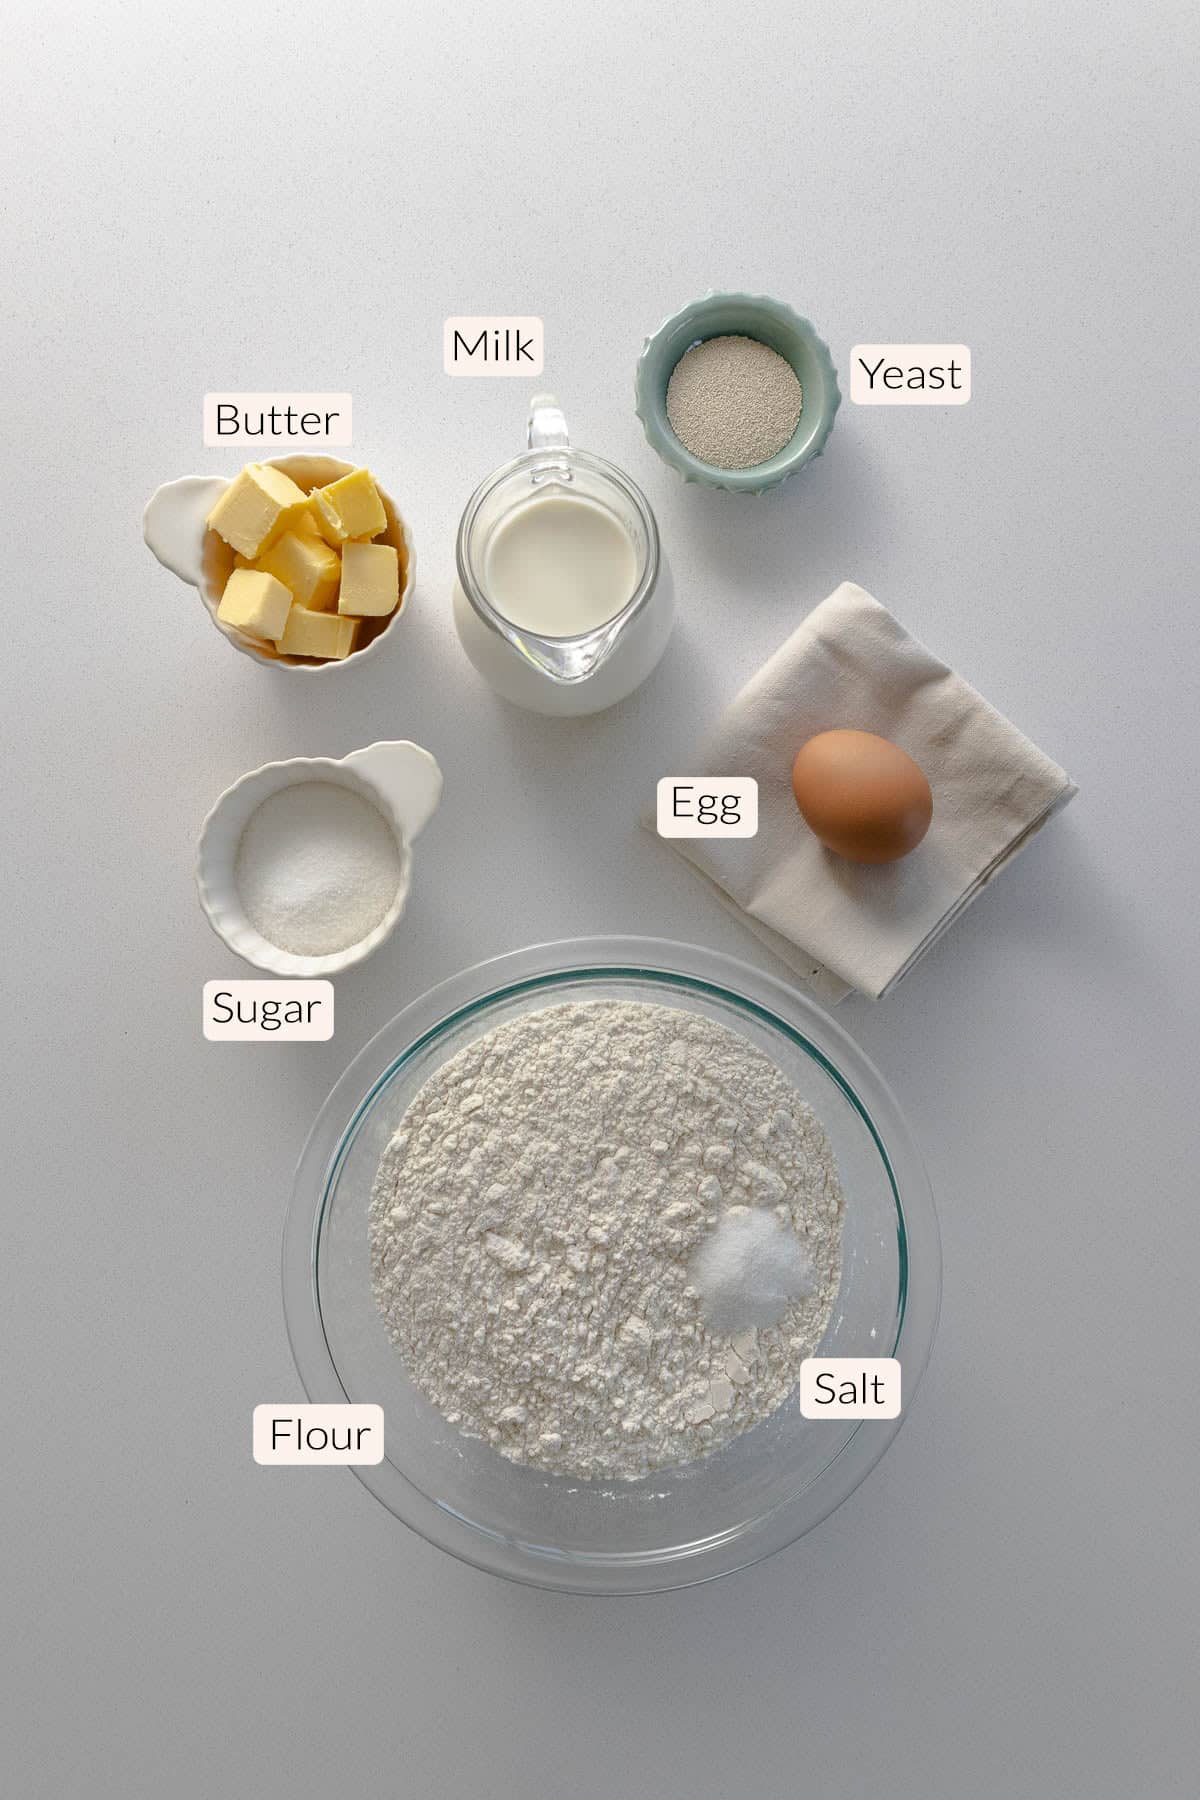 Bread dough ingredients - flour, salt, sugar, butter, milk, an egg, and active yeast.